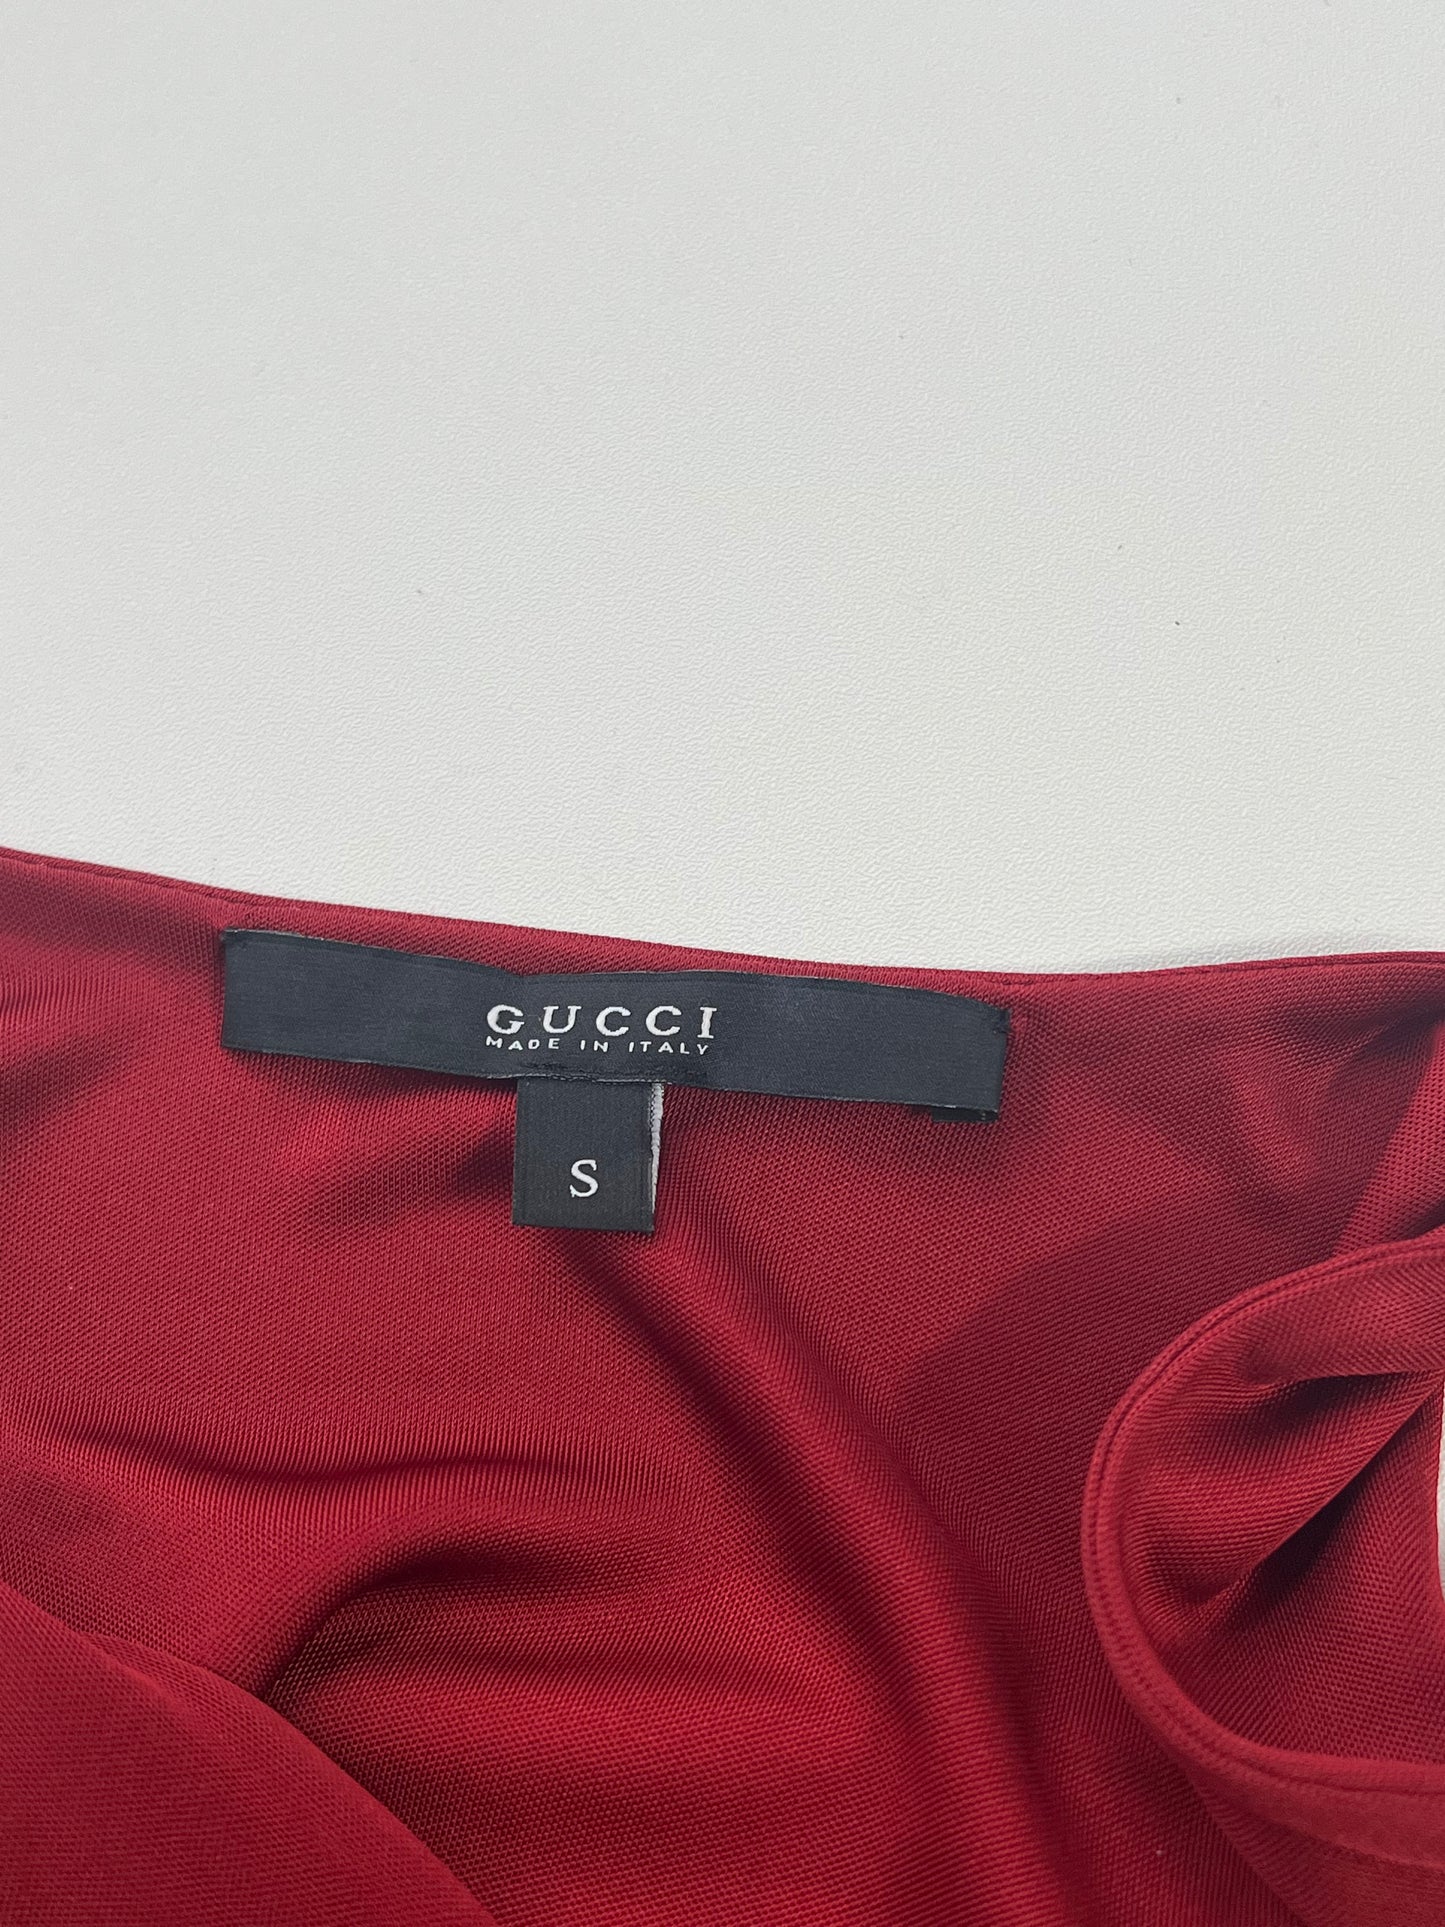 Gucci Burgundy Keyhole Halter Blouse Size S